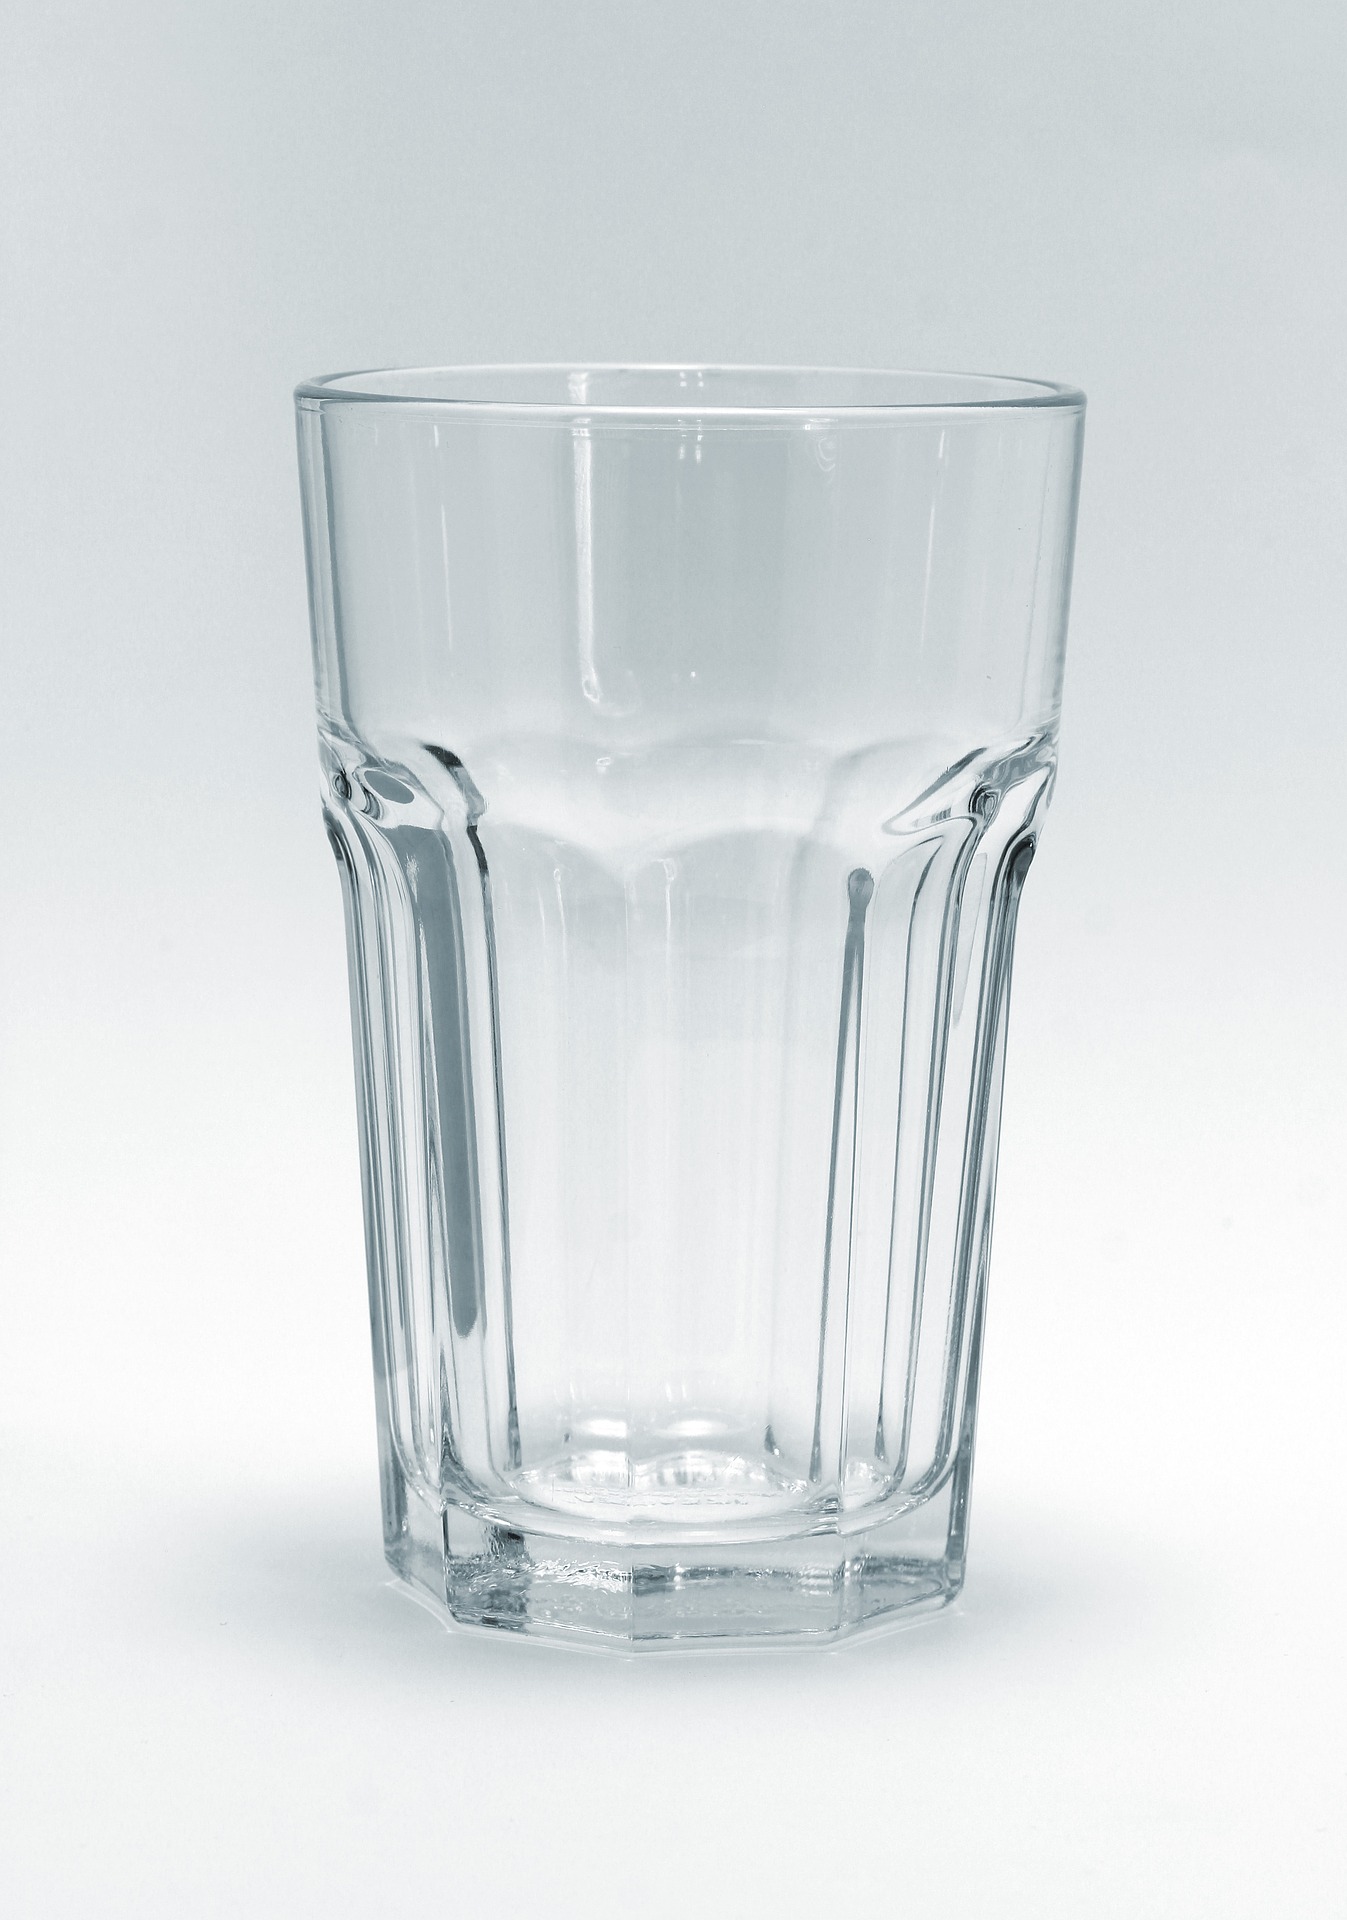 Стакан. Стакан стеклянный. Стакан воды. Стеклянный стакан гранёный. Стаканы прозрачные стеклянные.